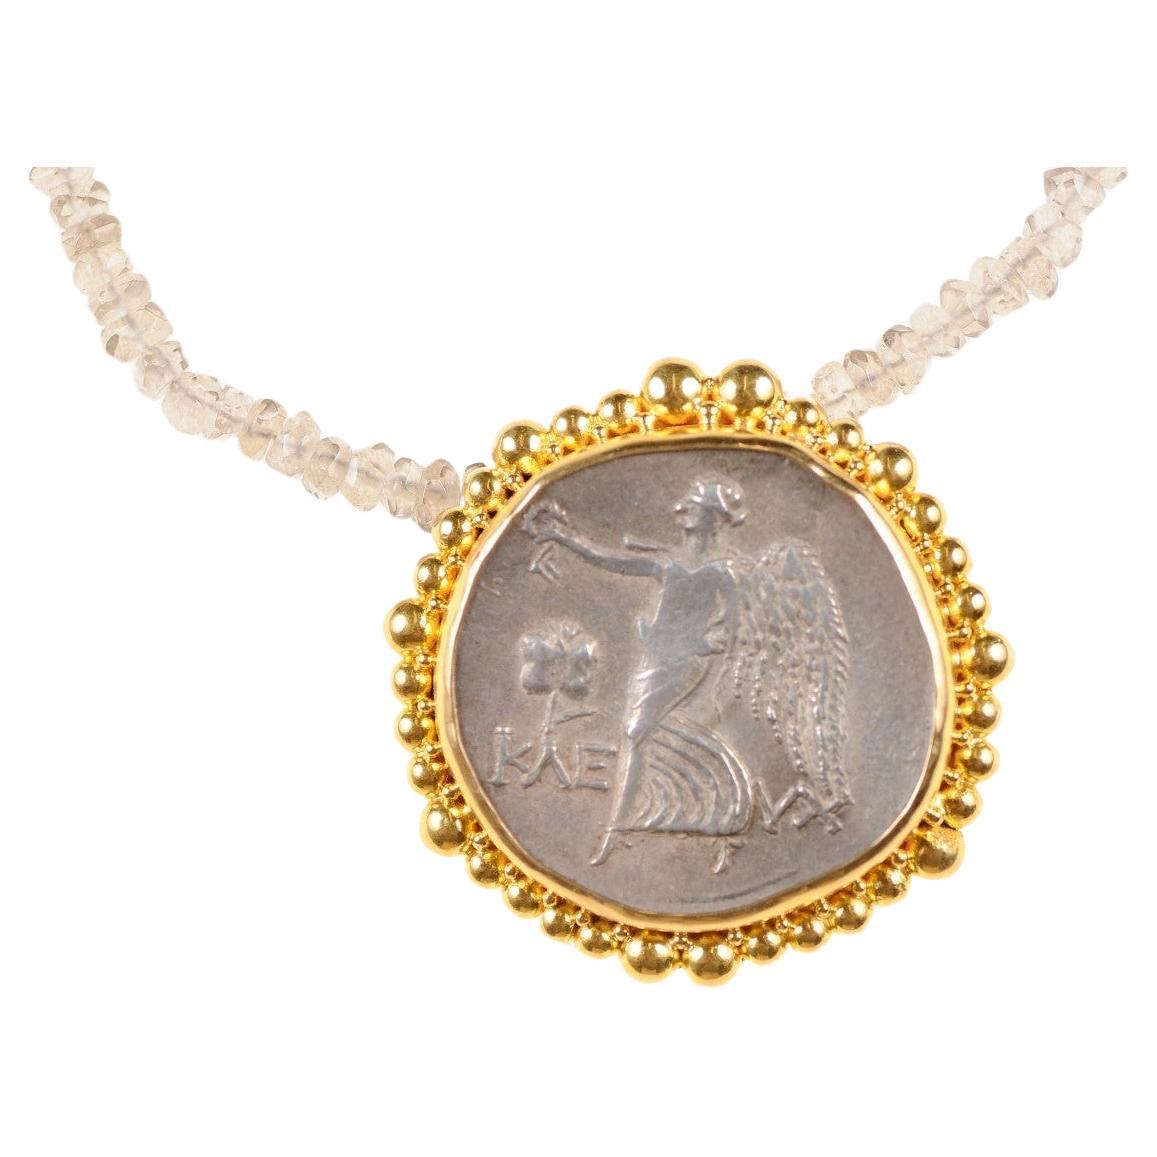 Pendentif grec ancien en or 22 carats (pendant uniquement) en vente